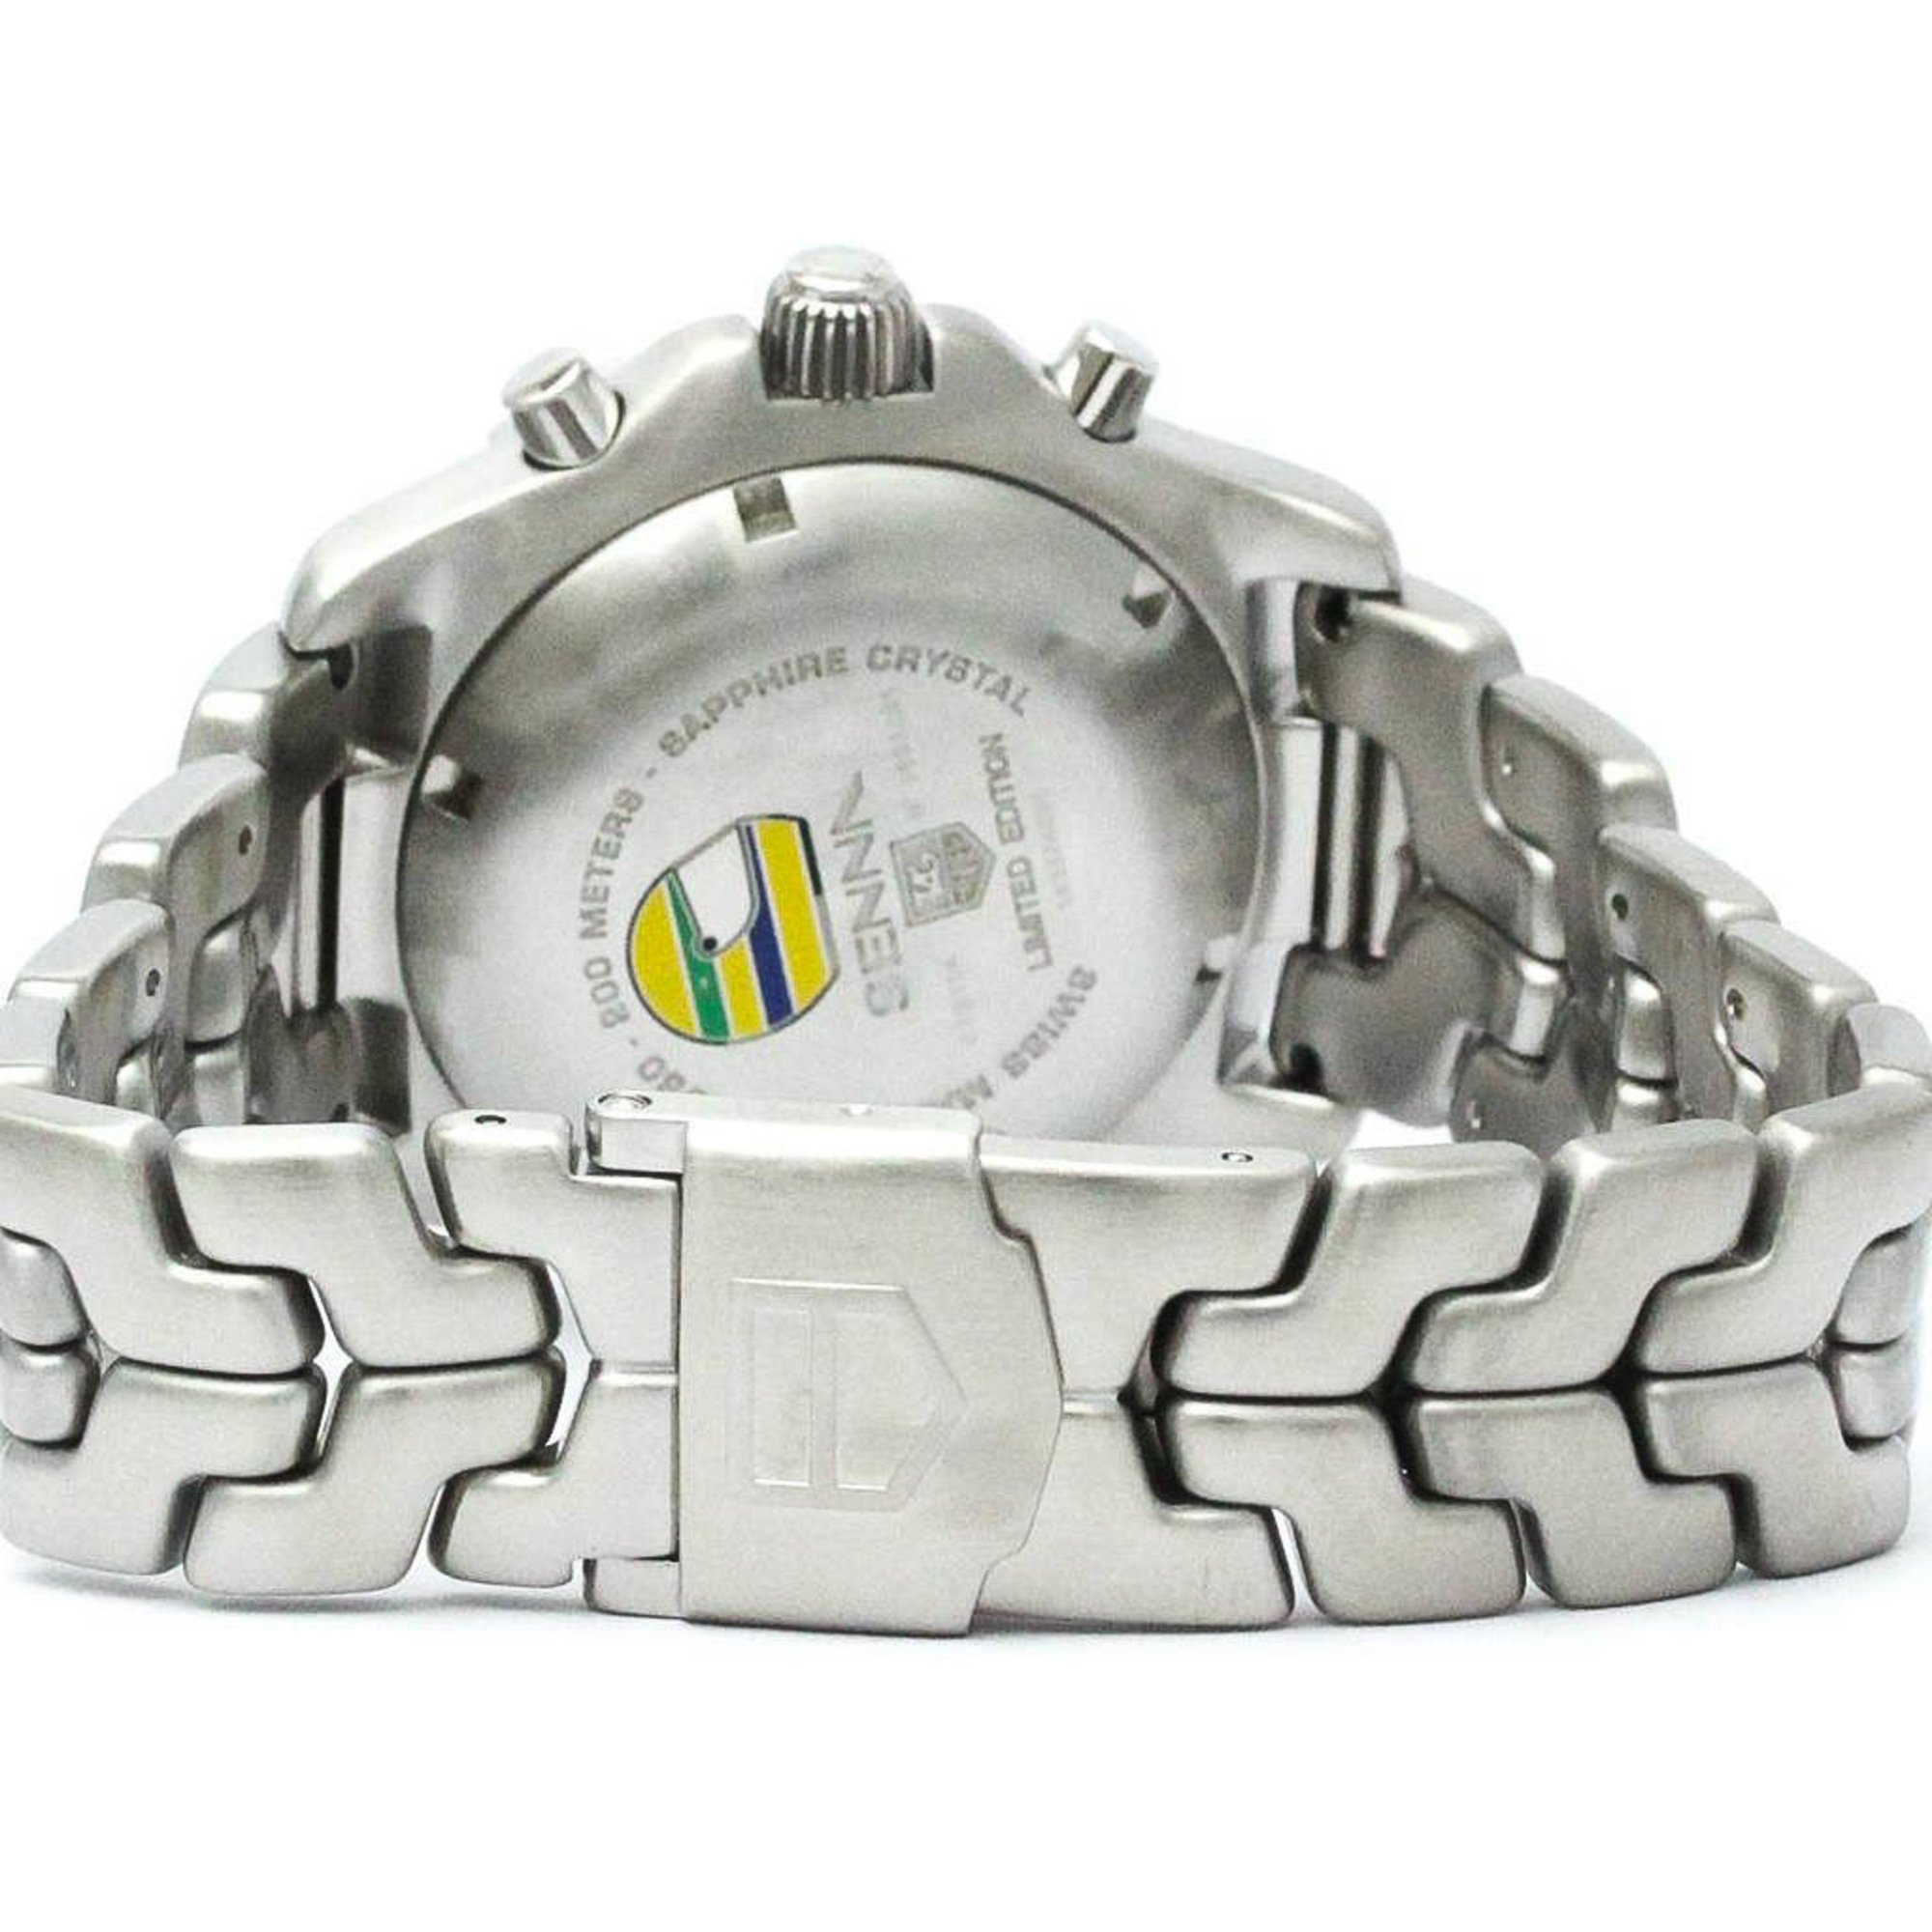 Polished TAG HEUER LINK Chronograph Ayrton Senna Limited Watch CT5114 BF571766